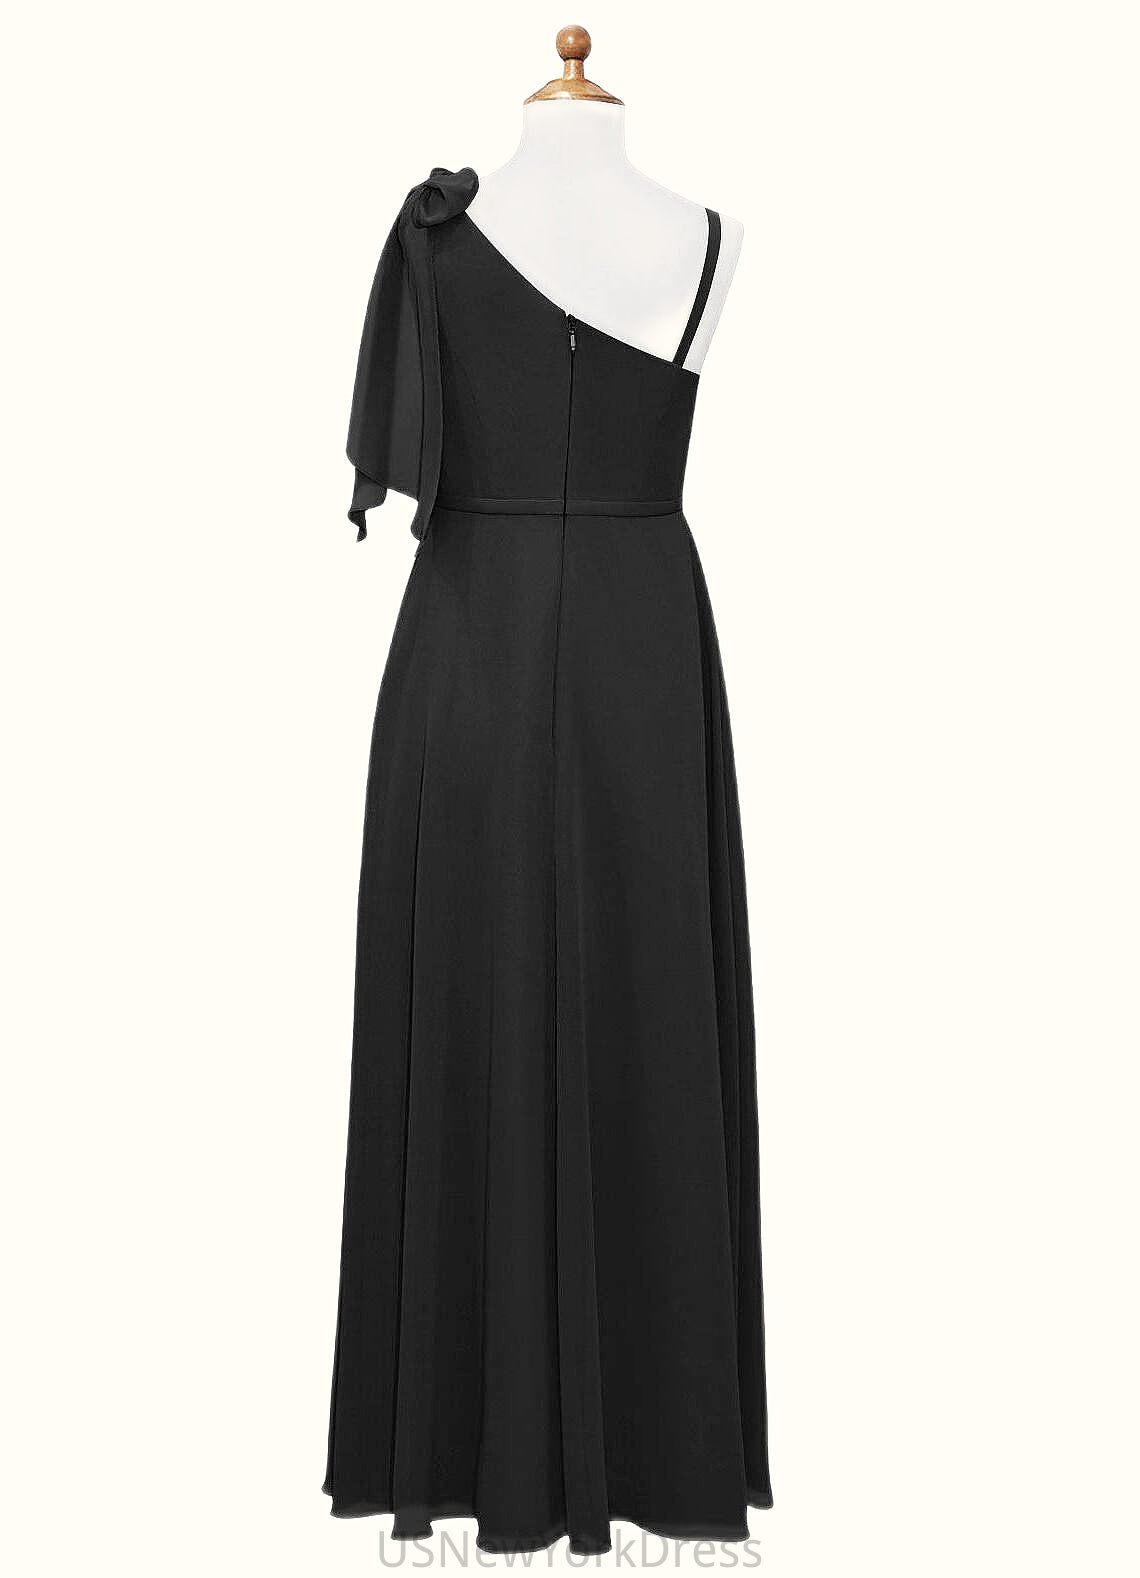 Pearl A-Line Bow Chiffon Floor-Length Junior Bridesmaid Dress black DJP0022850